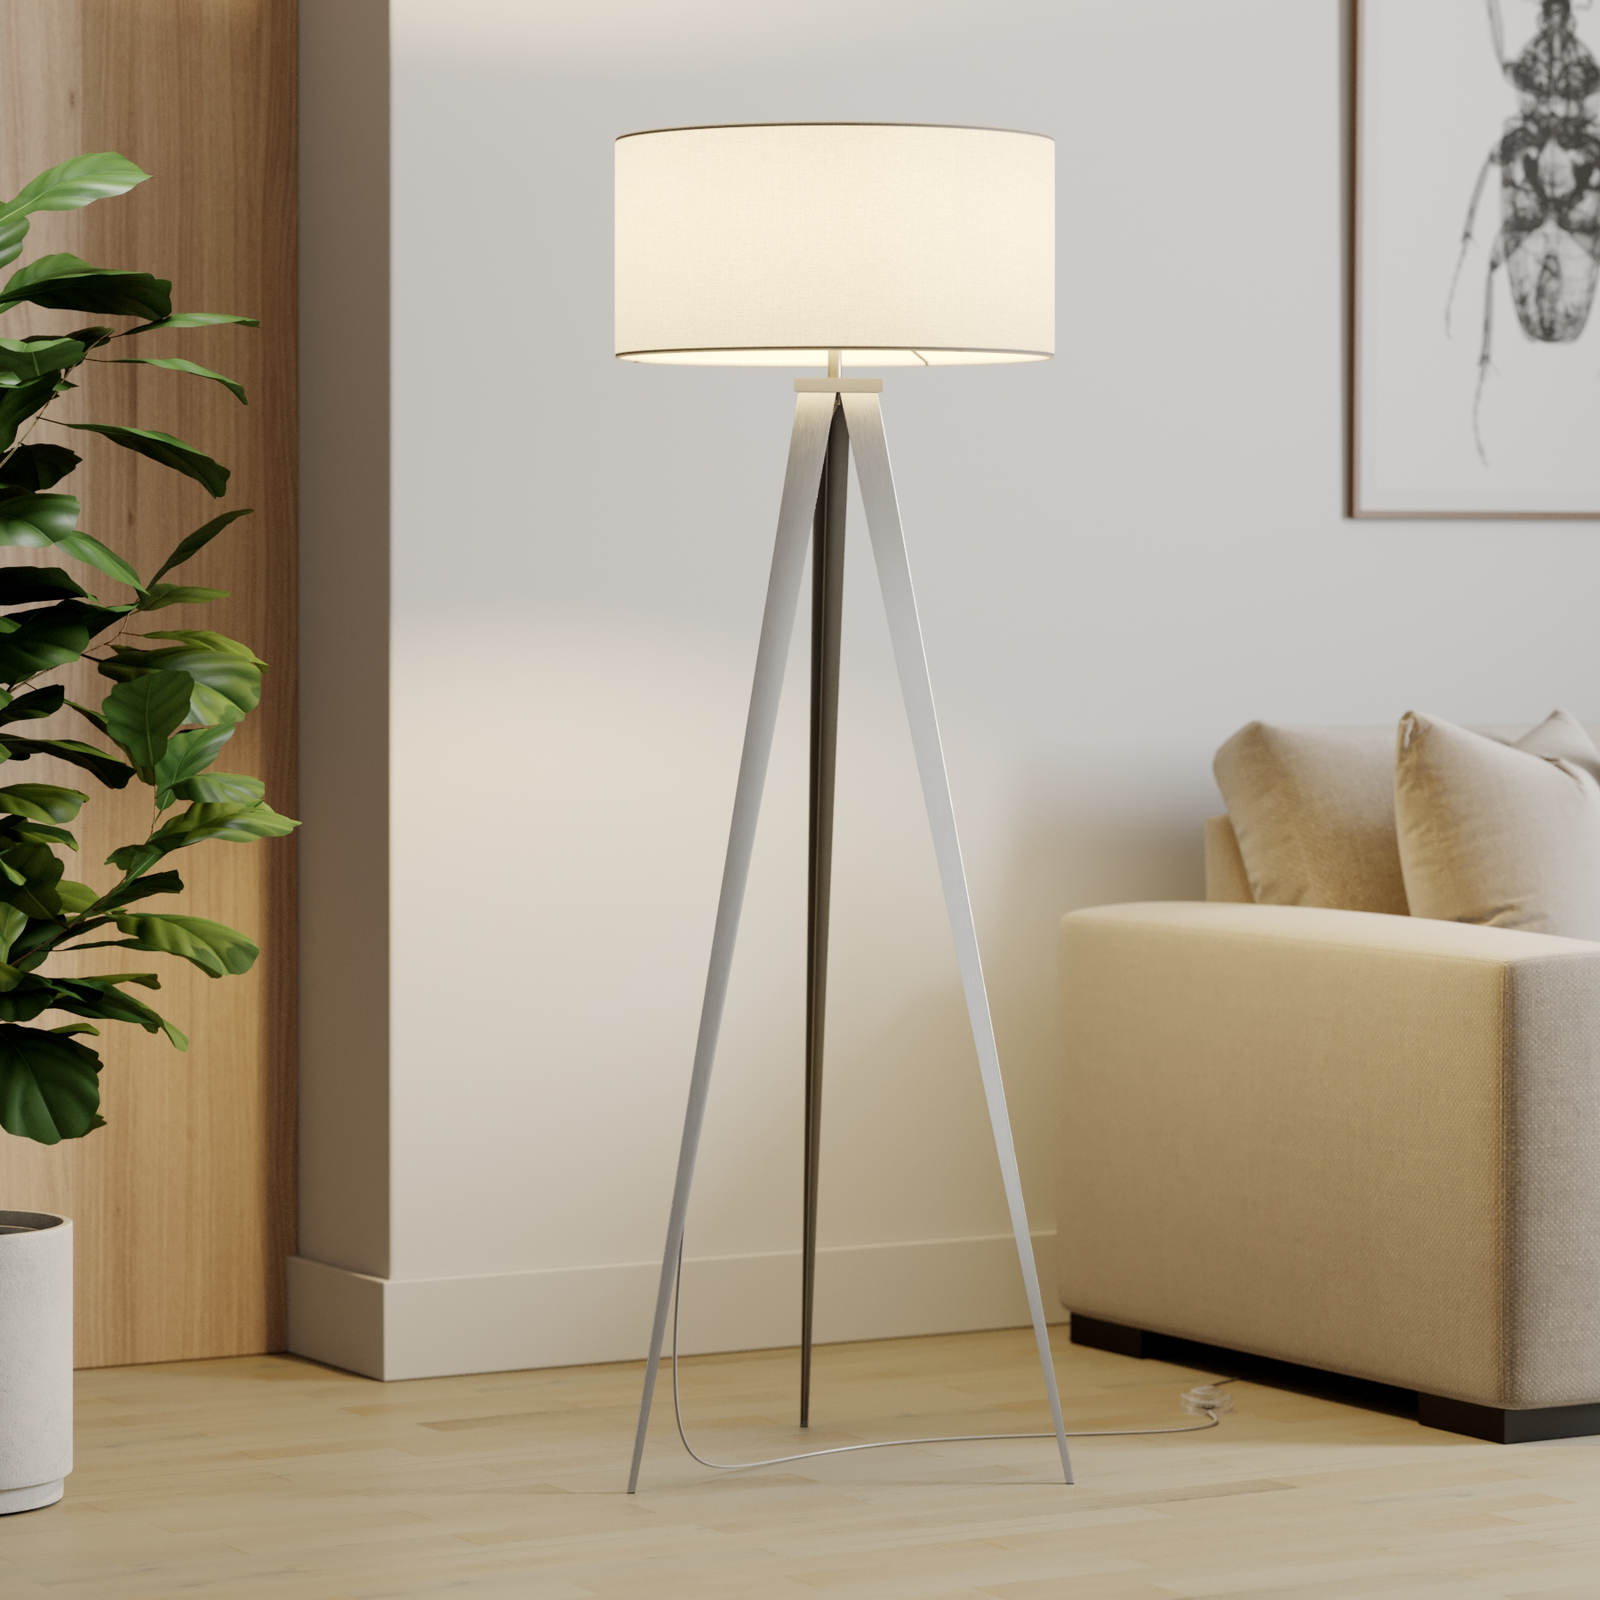 Elegant tripod floor lamp Benik